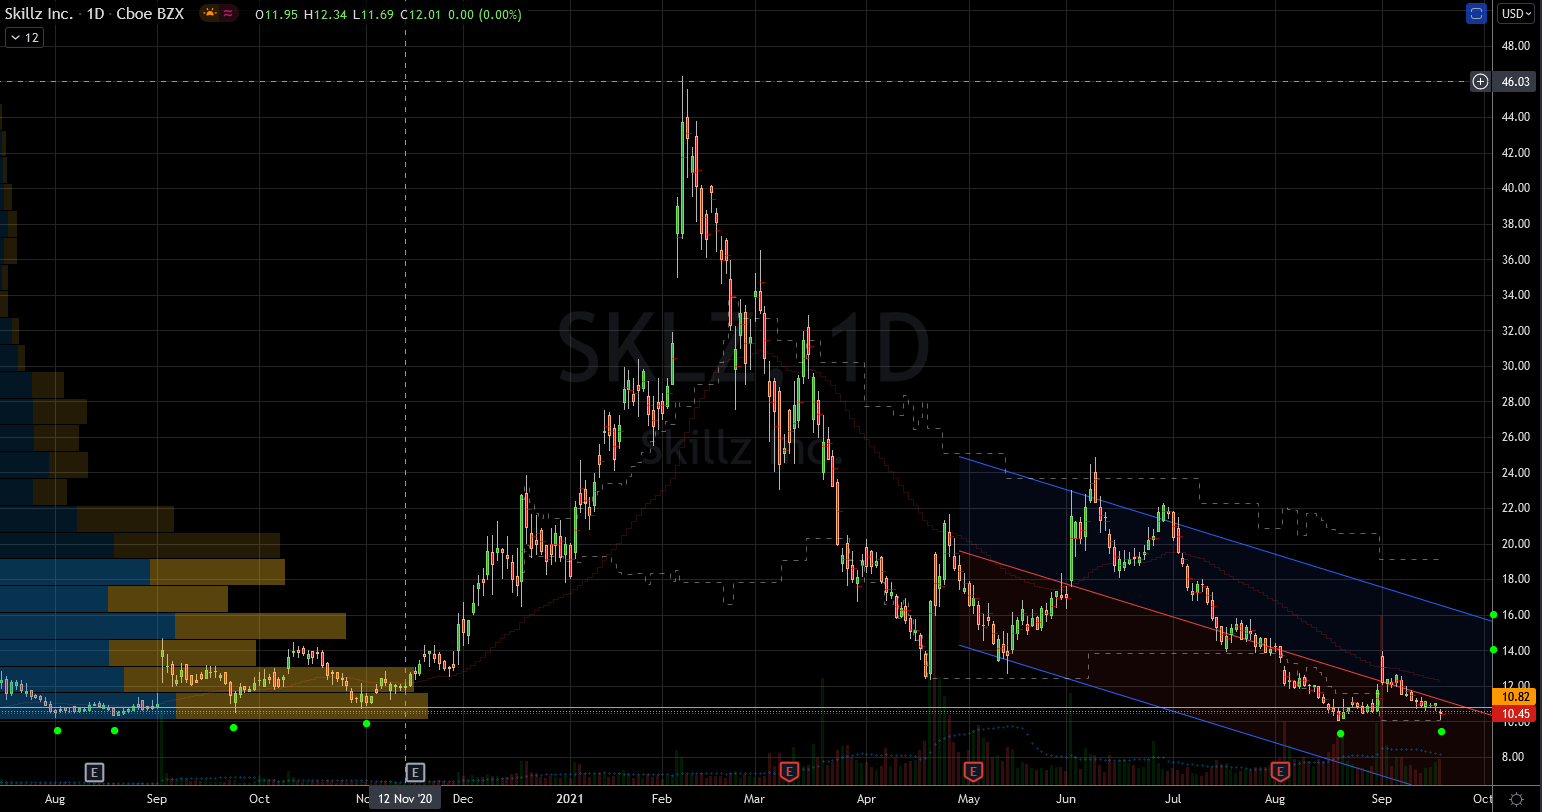 Skillz (SKLZ) Stock Chart Showing Back to Base Mode